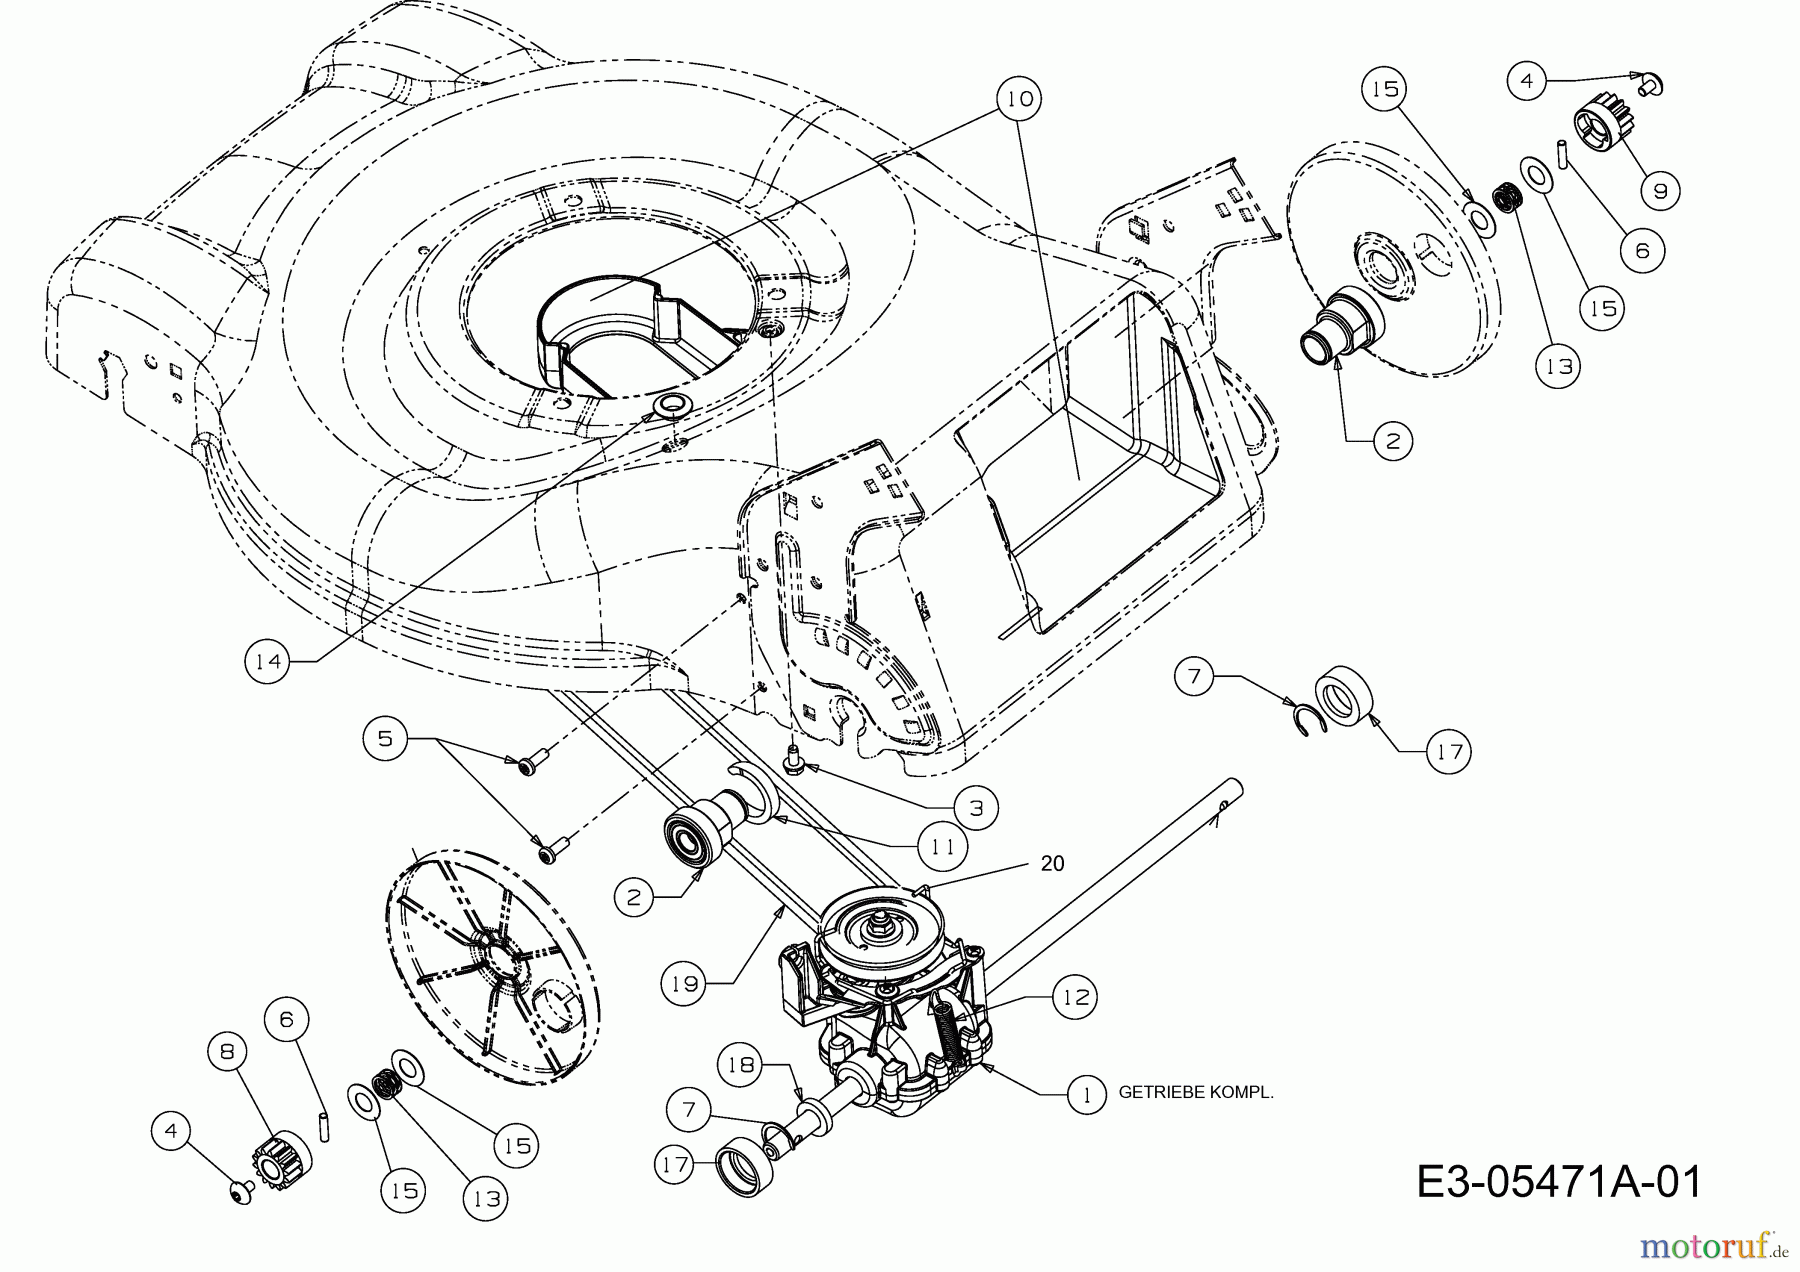  Cmi Motormäher mit Antrieb B 46 A 12D-J54H620  (2011) Getriebe